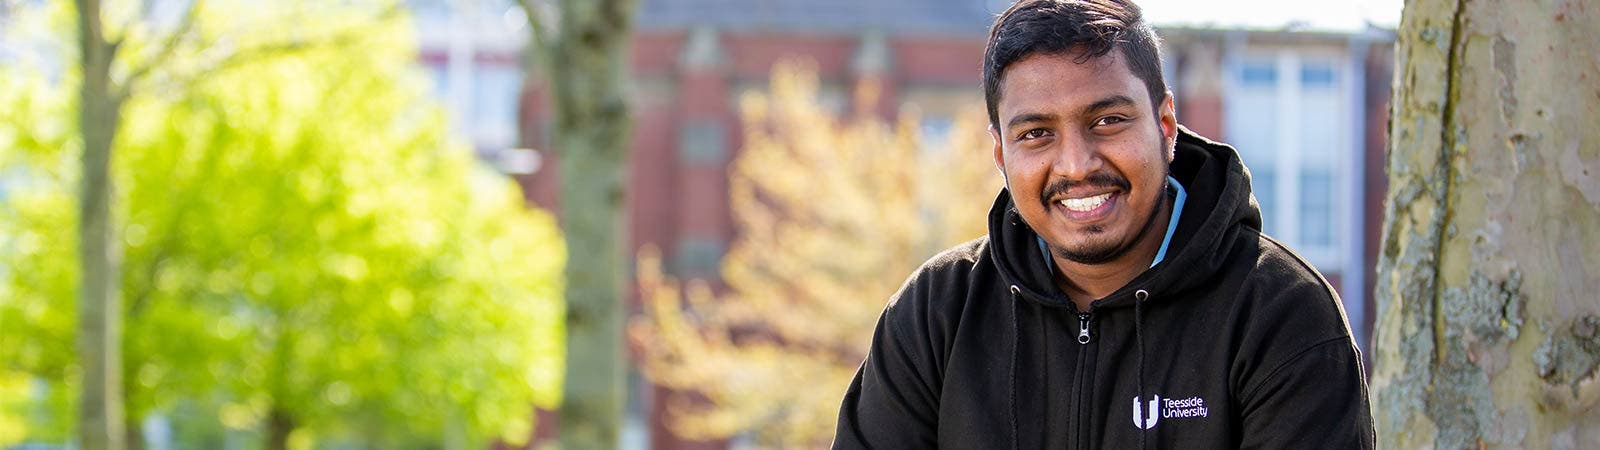 Student smiling outside wearing Teesside University hoodie